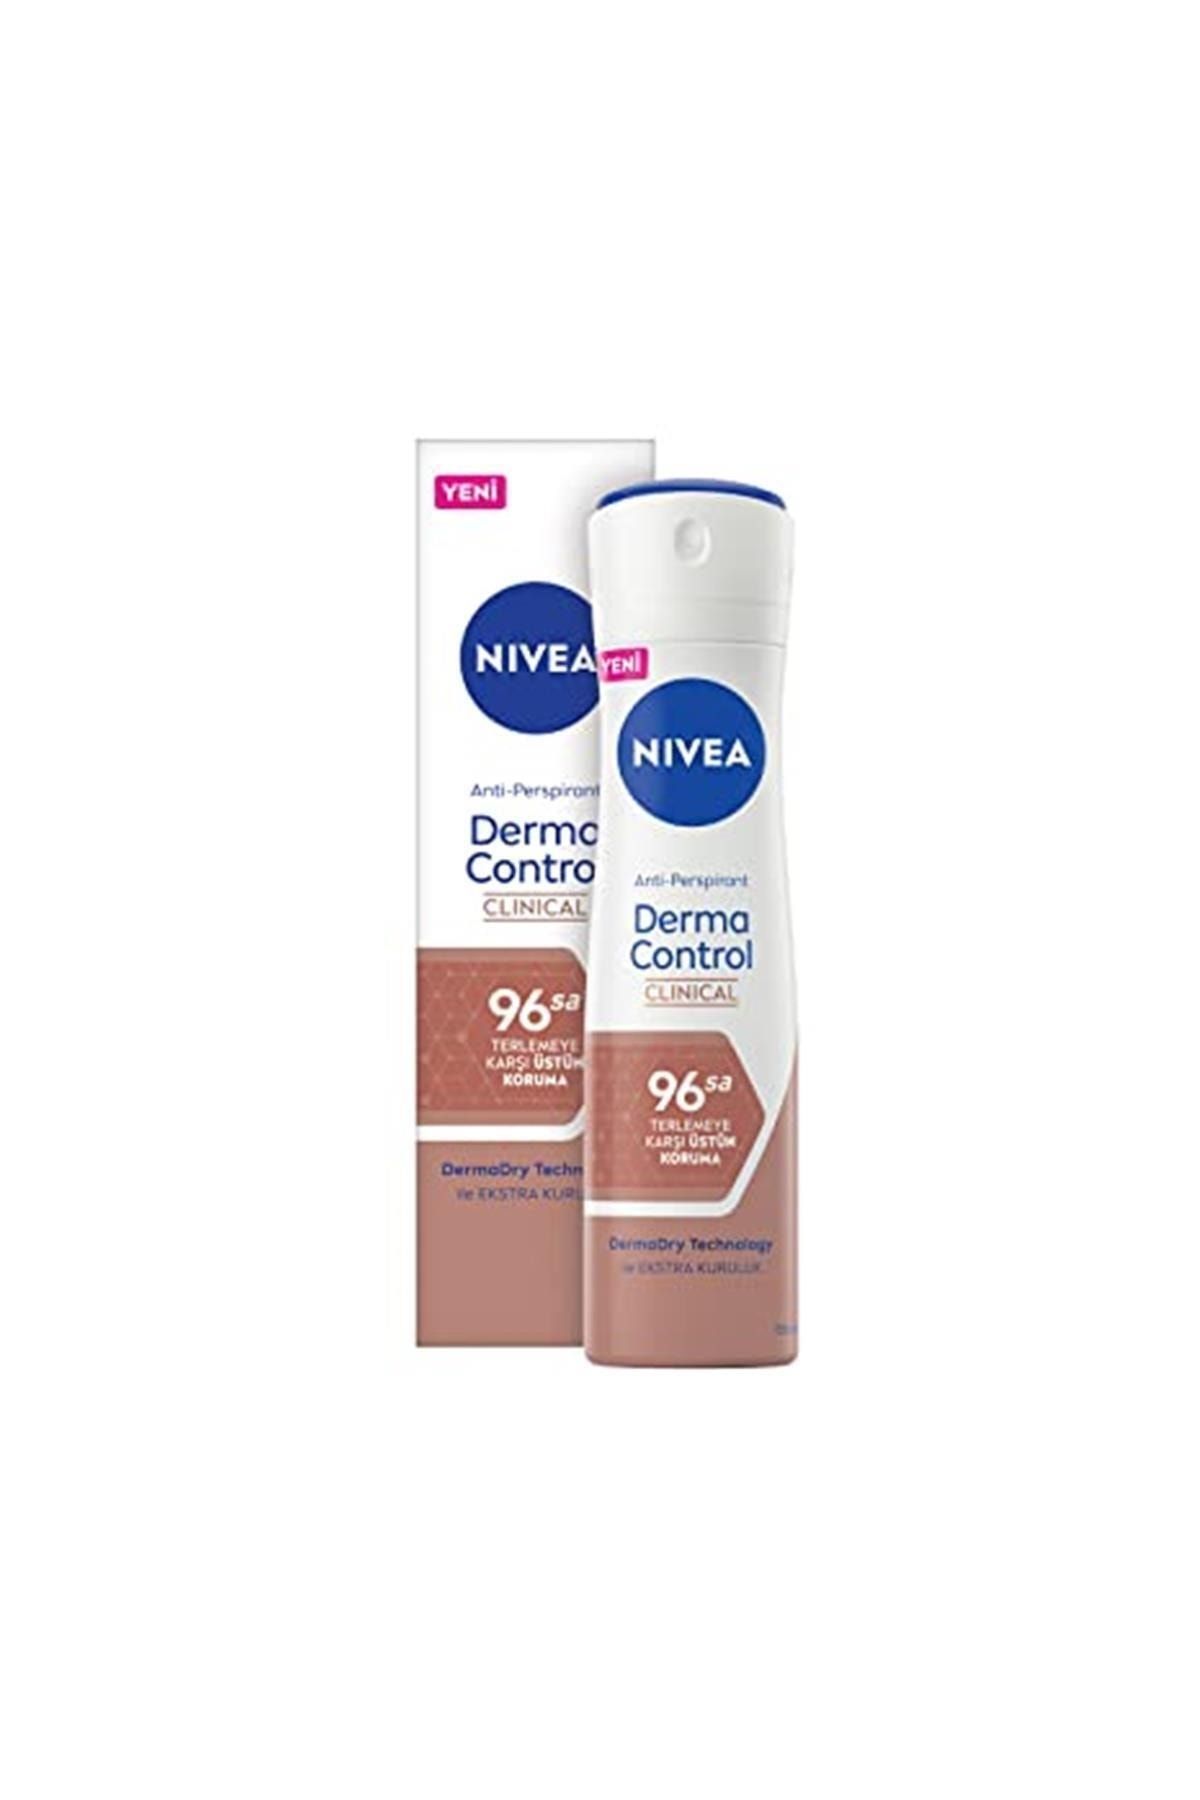 NIVEA Derma Control Clinical Kadın Sprey Deodorant 150 Ml, 96 Saat Üstün Koruma ,dermadry Technolog